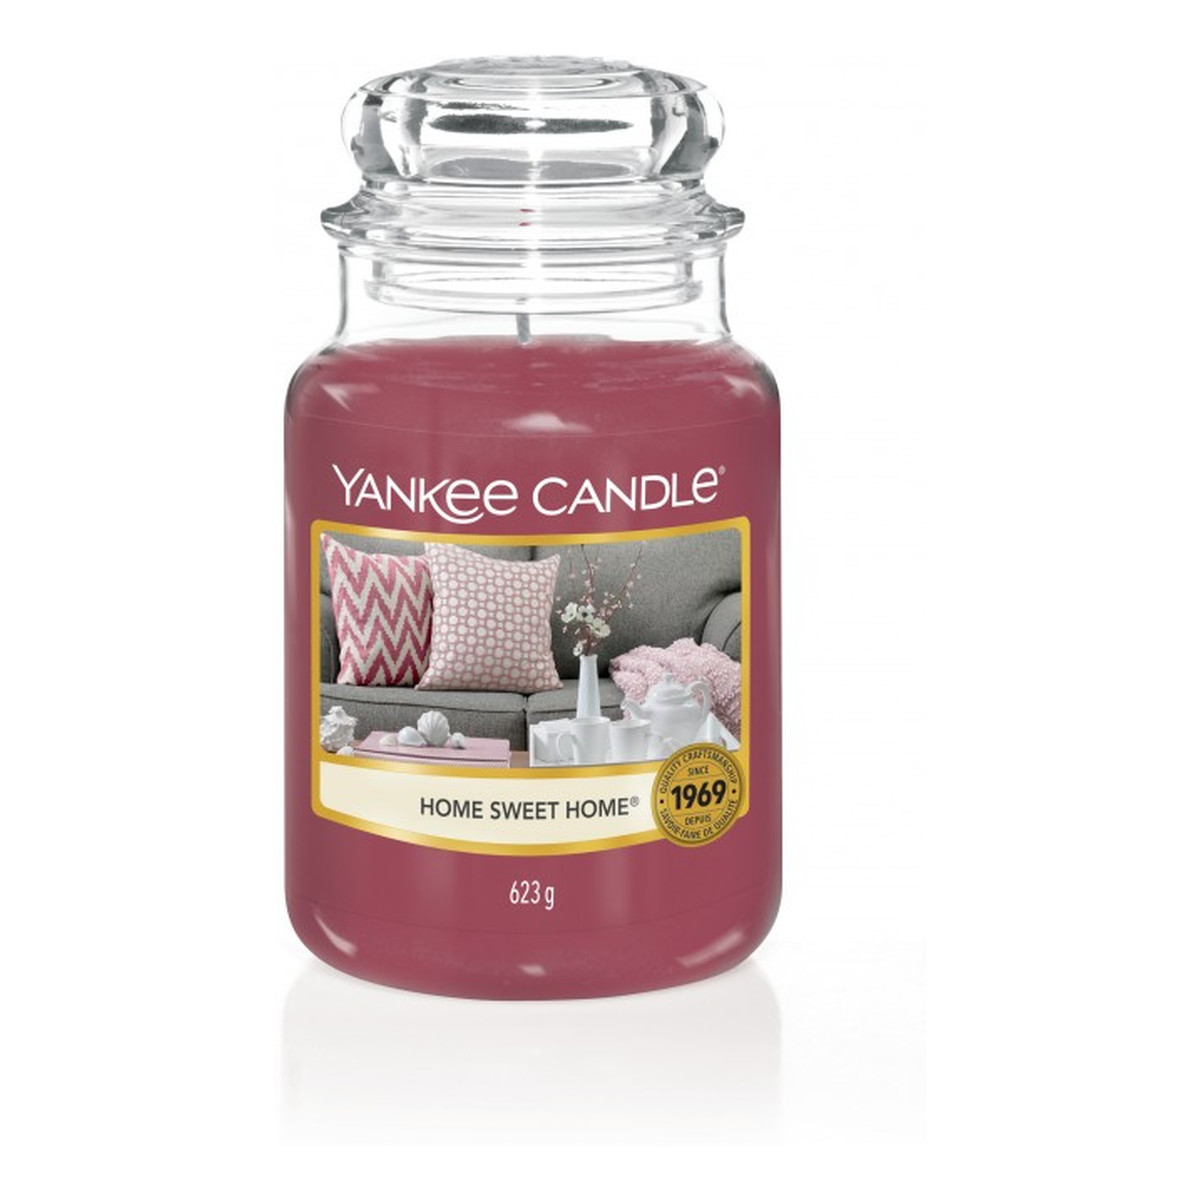 Yankee Candle Large Jar duża świeczka zapachowa Home Sweet Home 623g